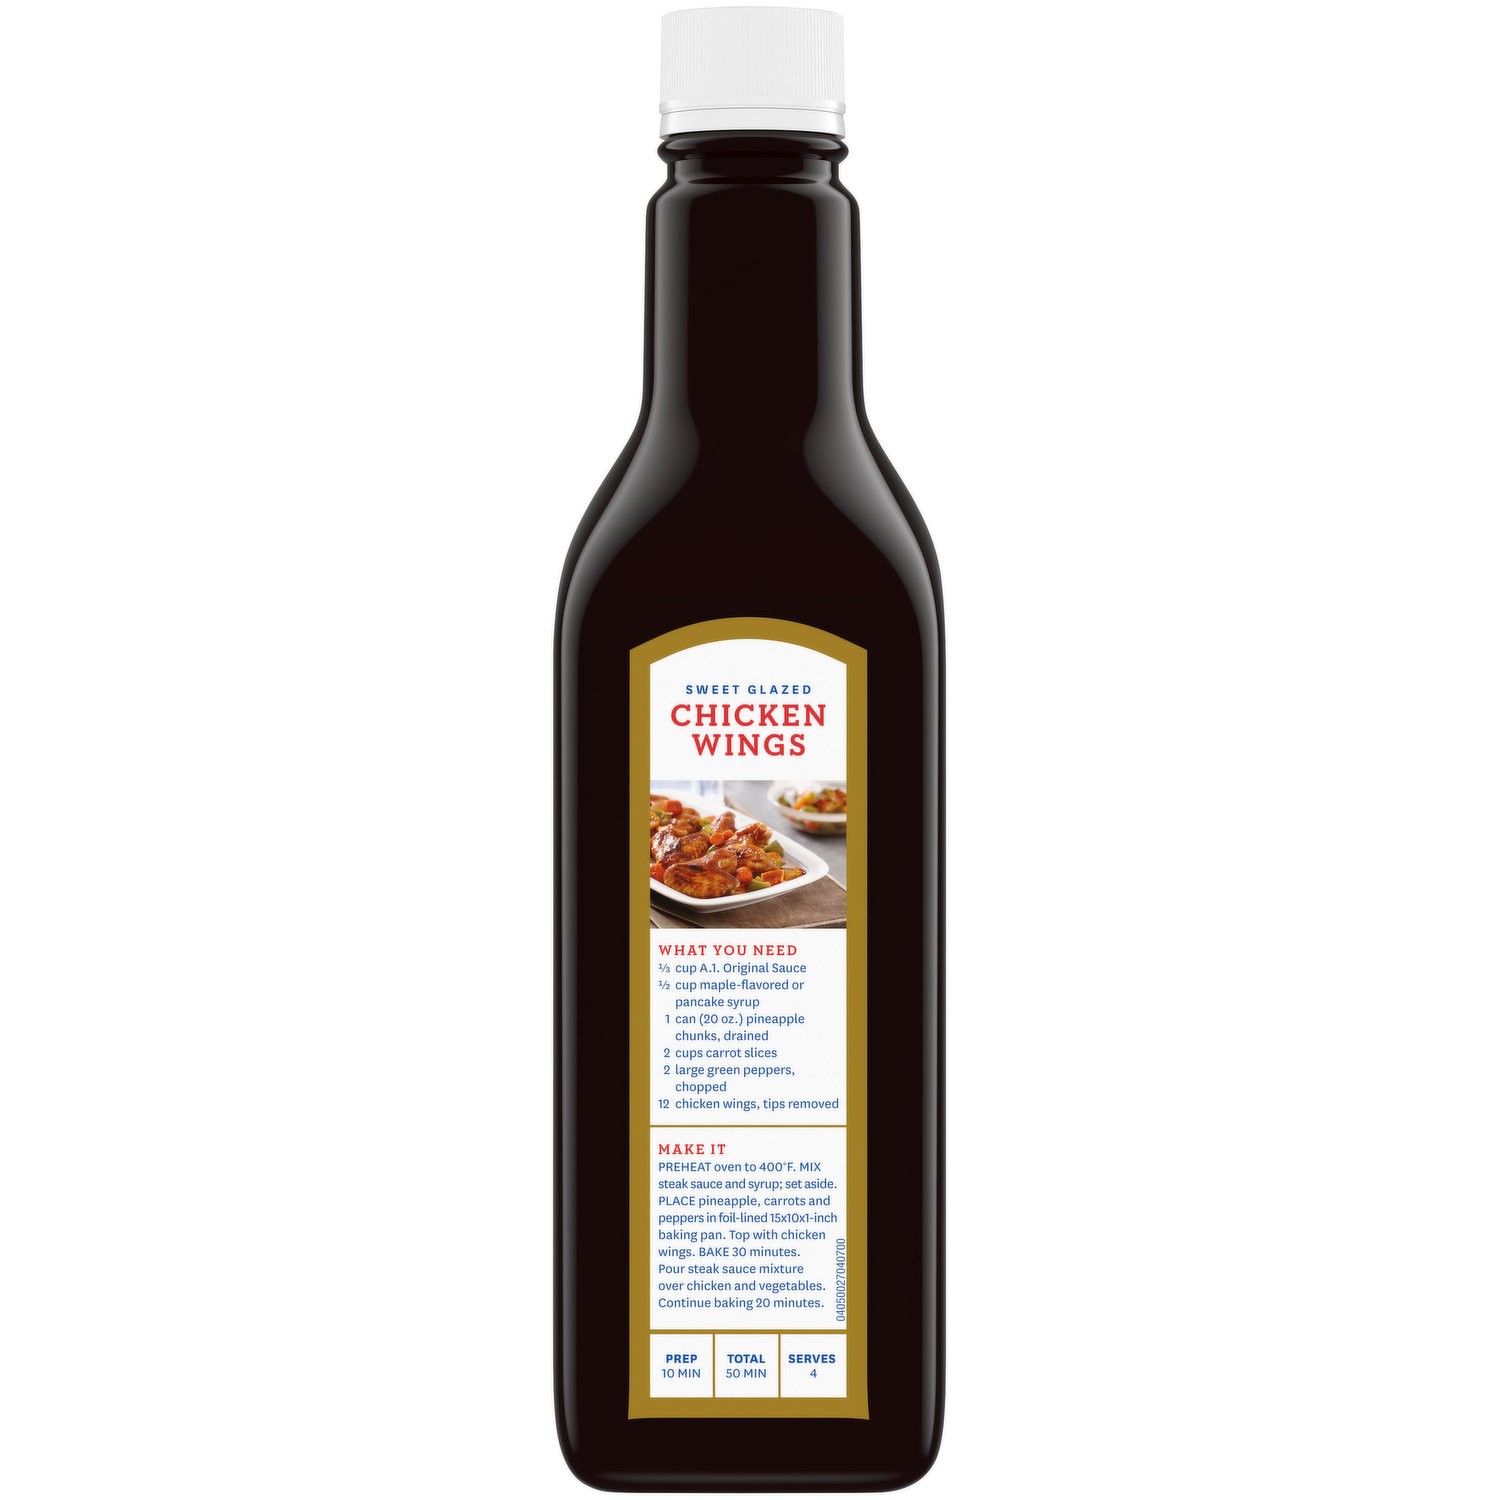 A.1. Original Steak Sauce Bottle, 10 Ounce, 12 Per Case